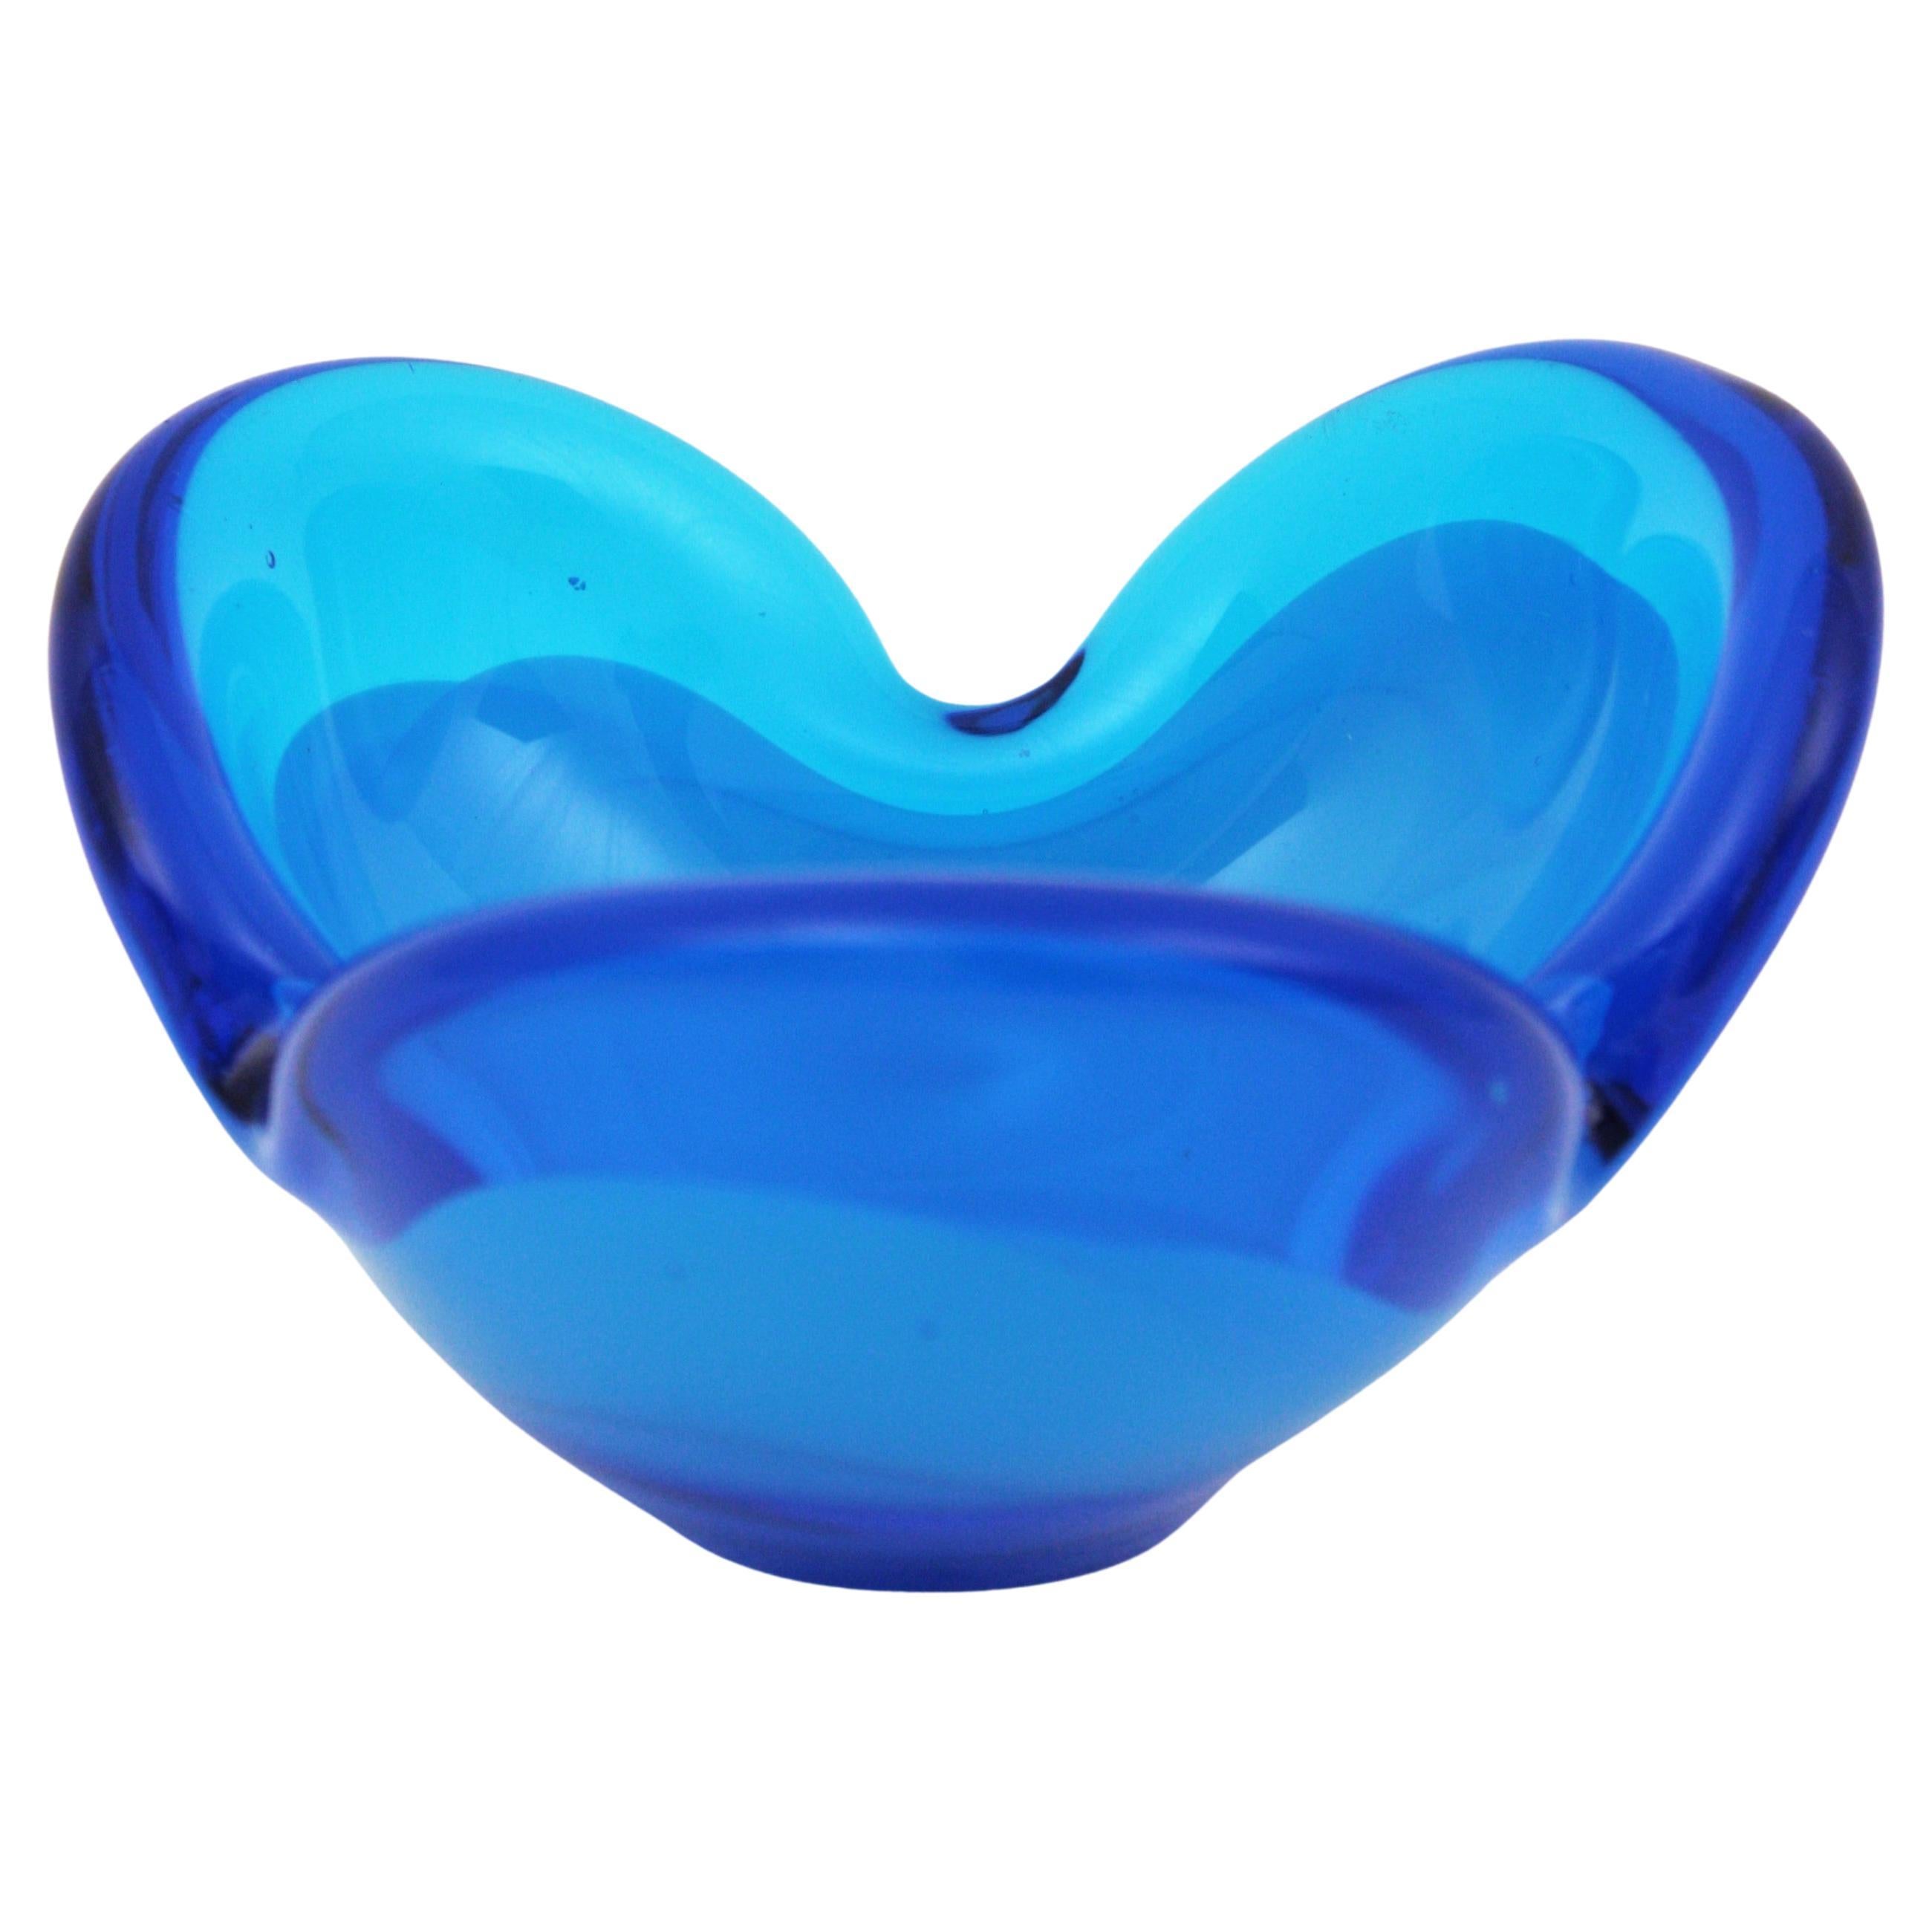 Seguso Murano Midcentury Blue Italian Art Glass Bowl